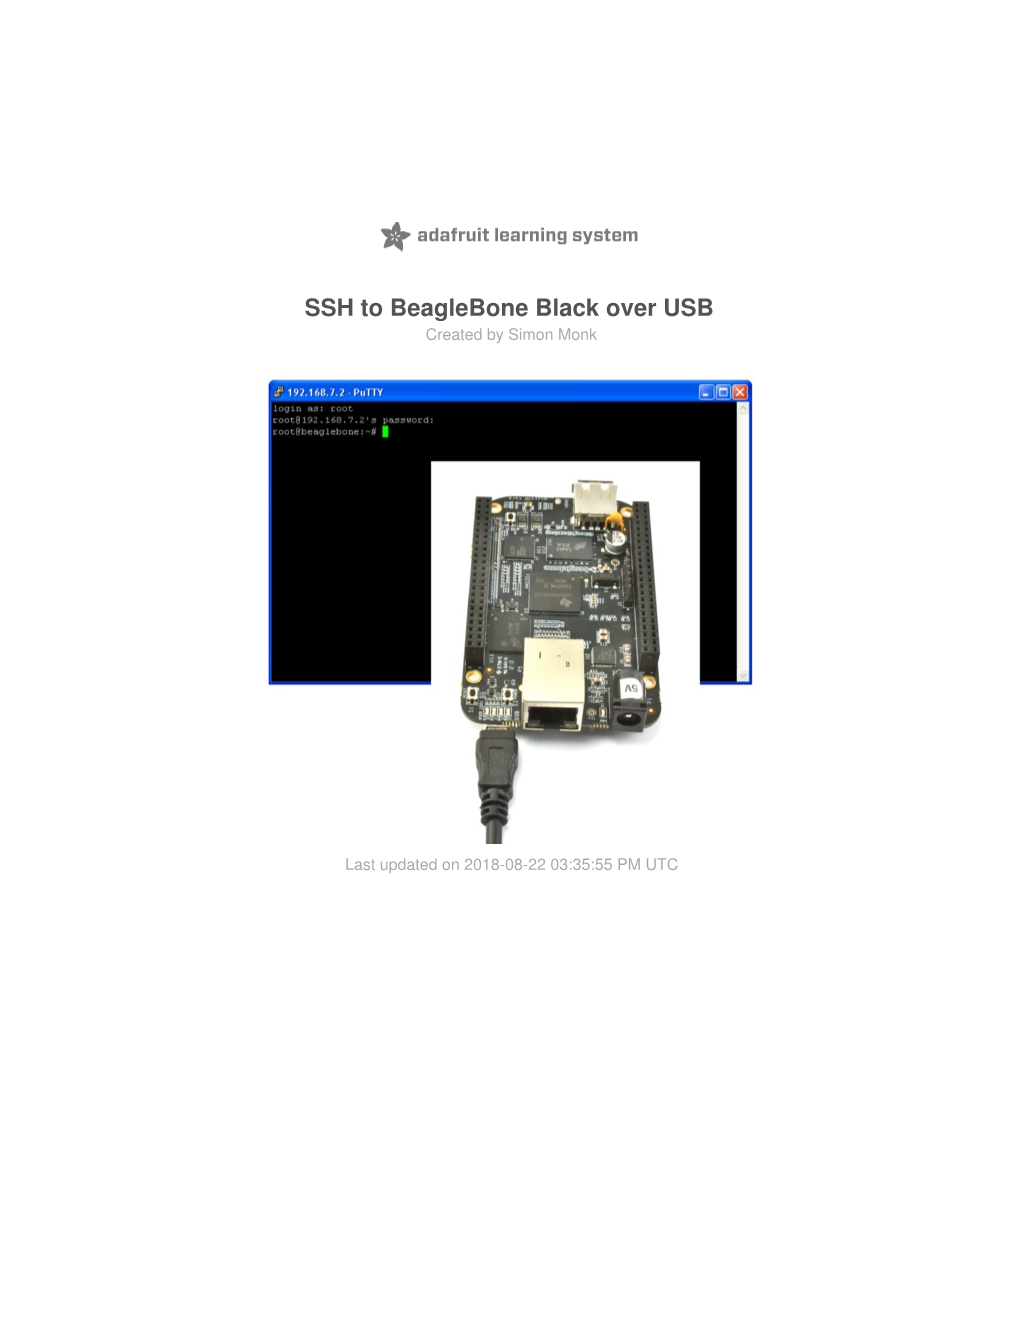 SSH to Beaglebone Black Over USB Created by Simon Monk